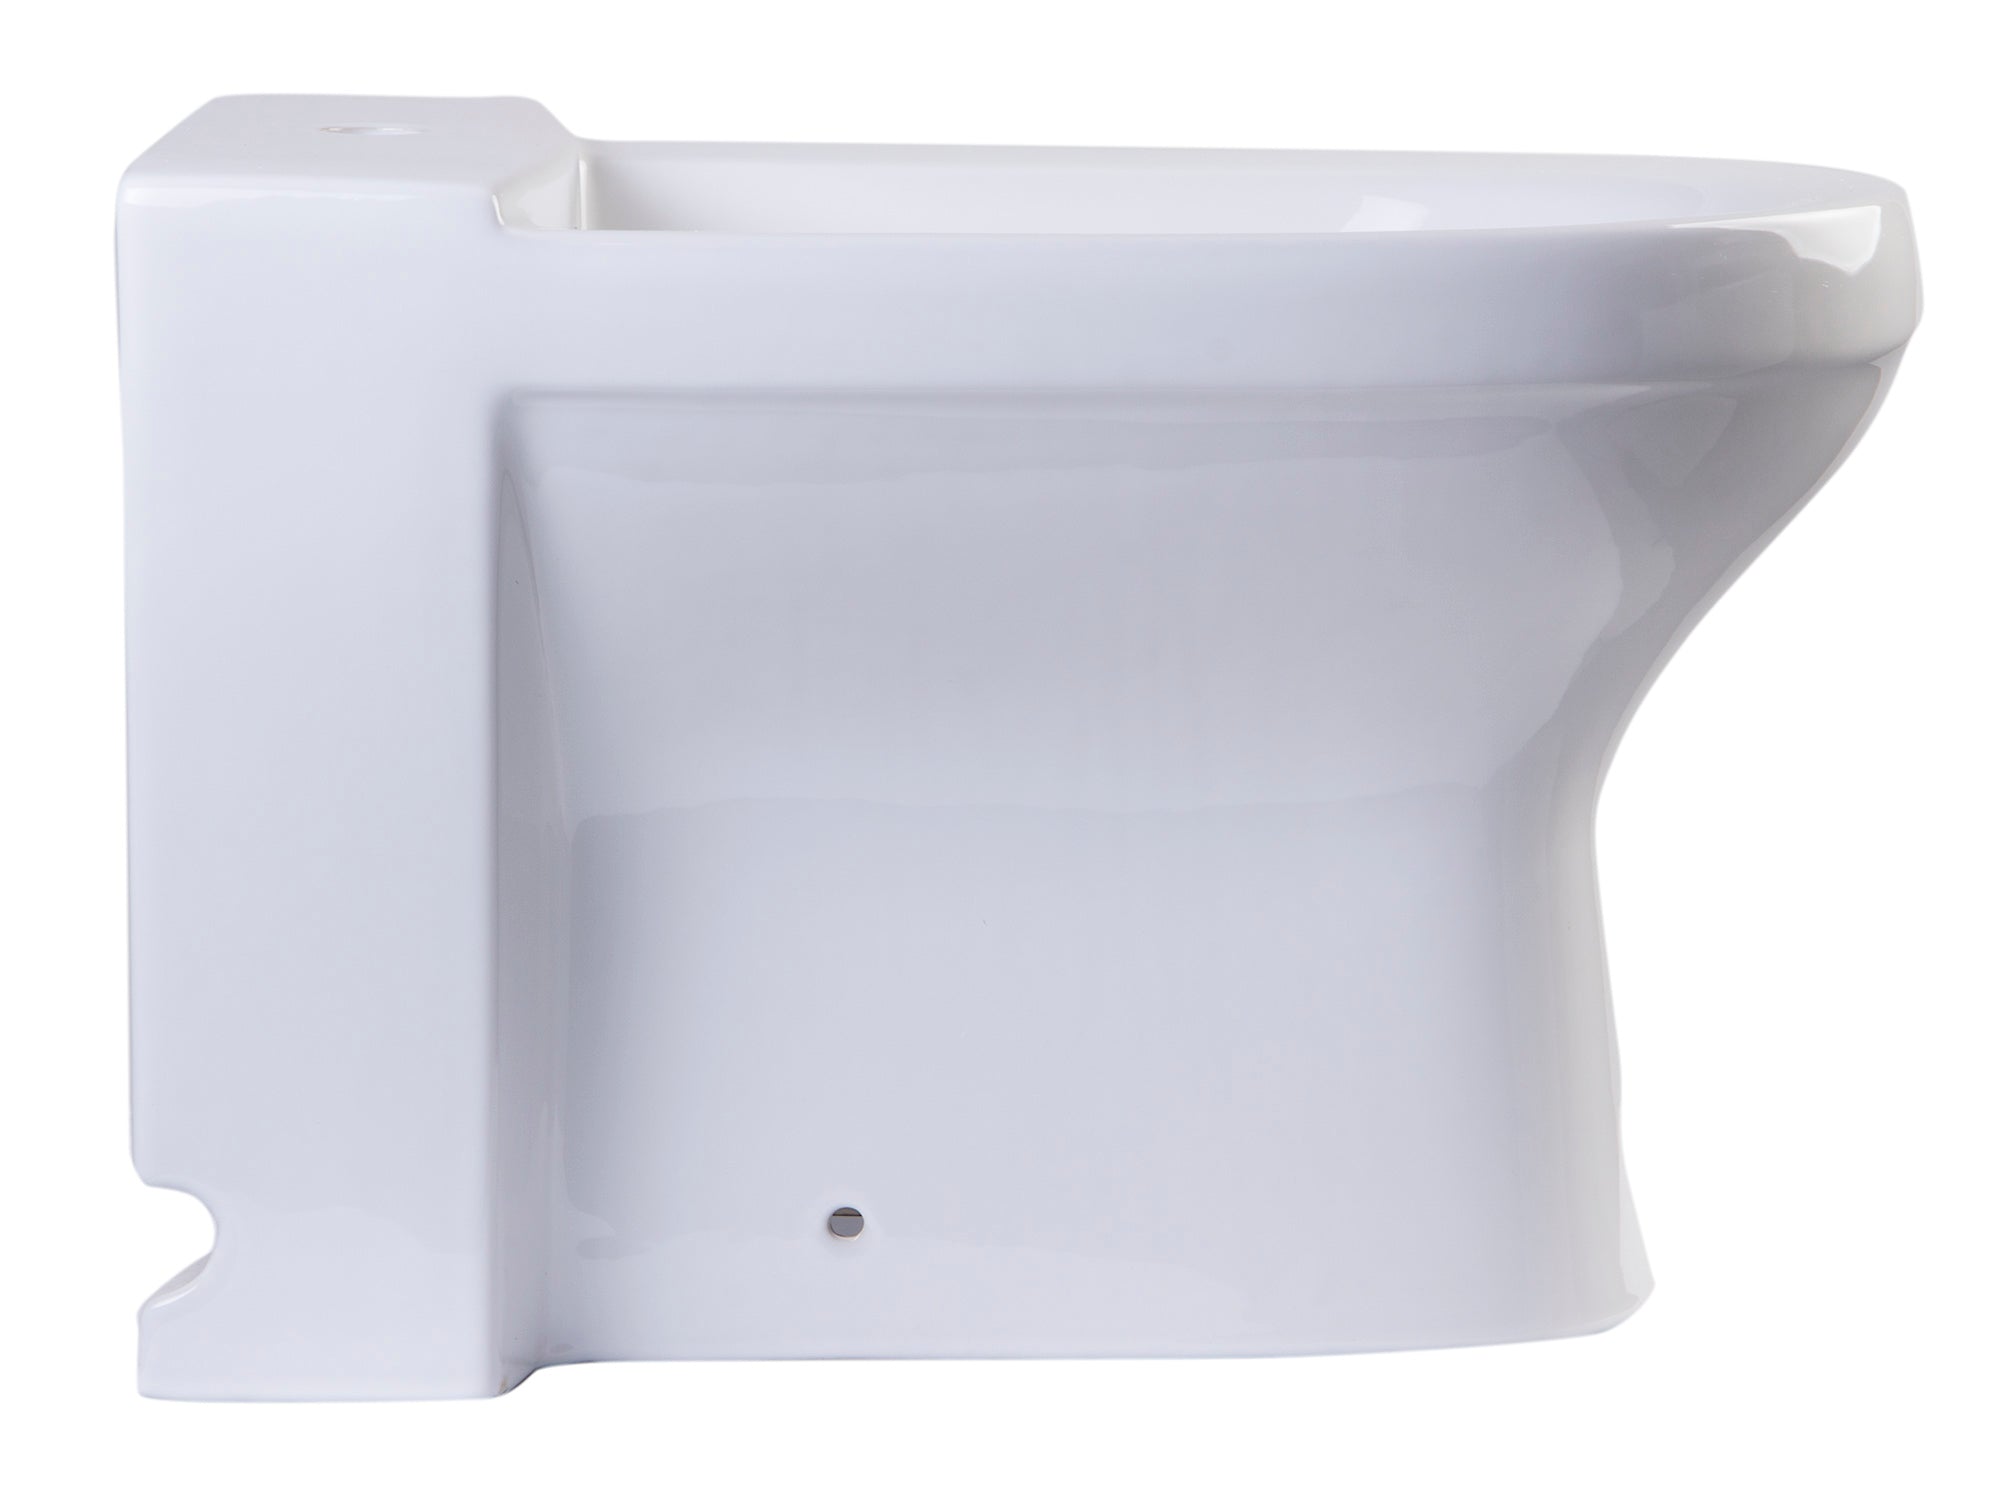 EAGO JA1010 Toilet Bidet White Ceramic with Elongated Seat